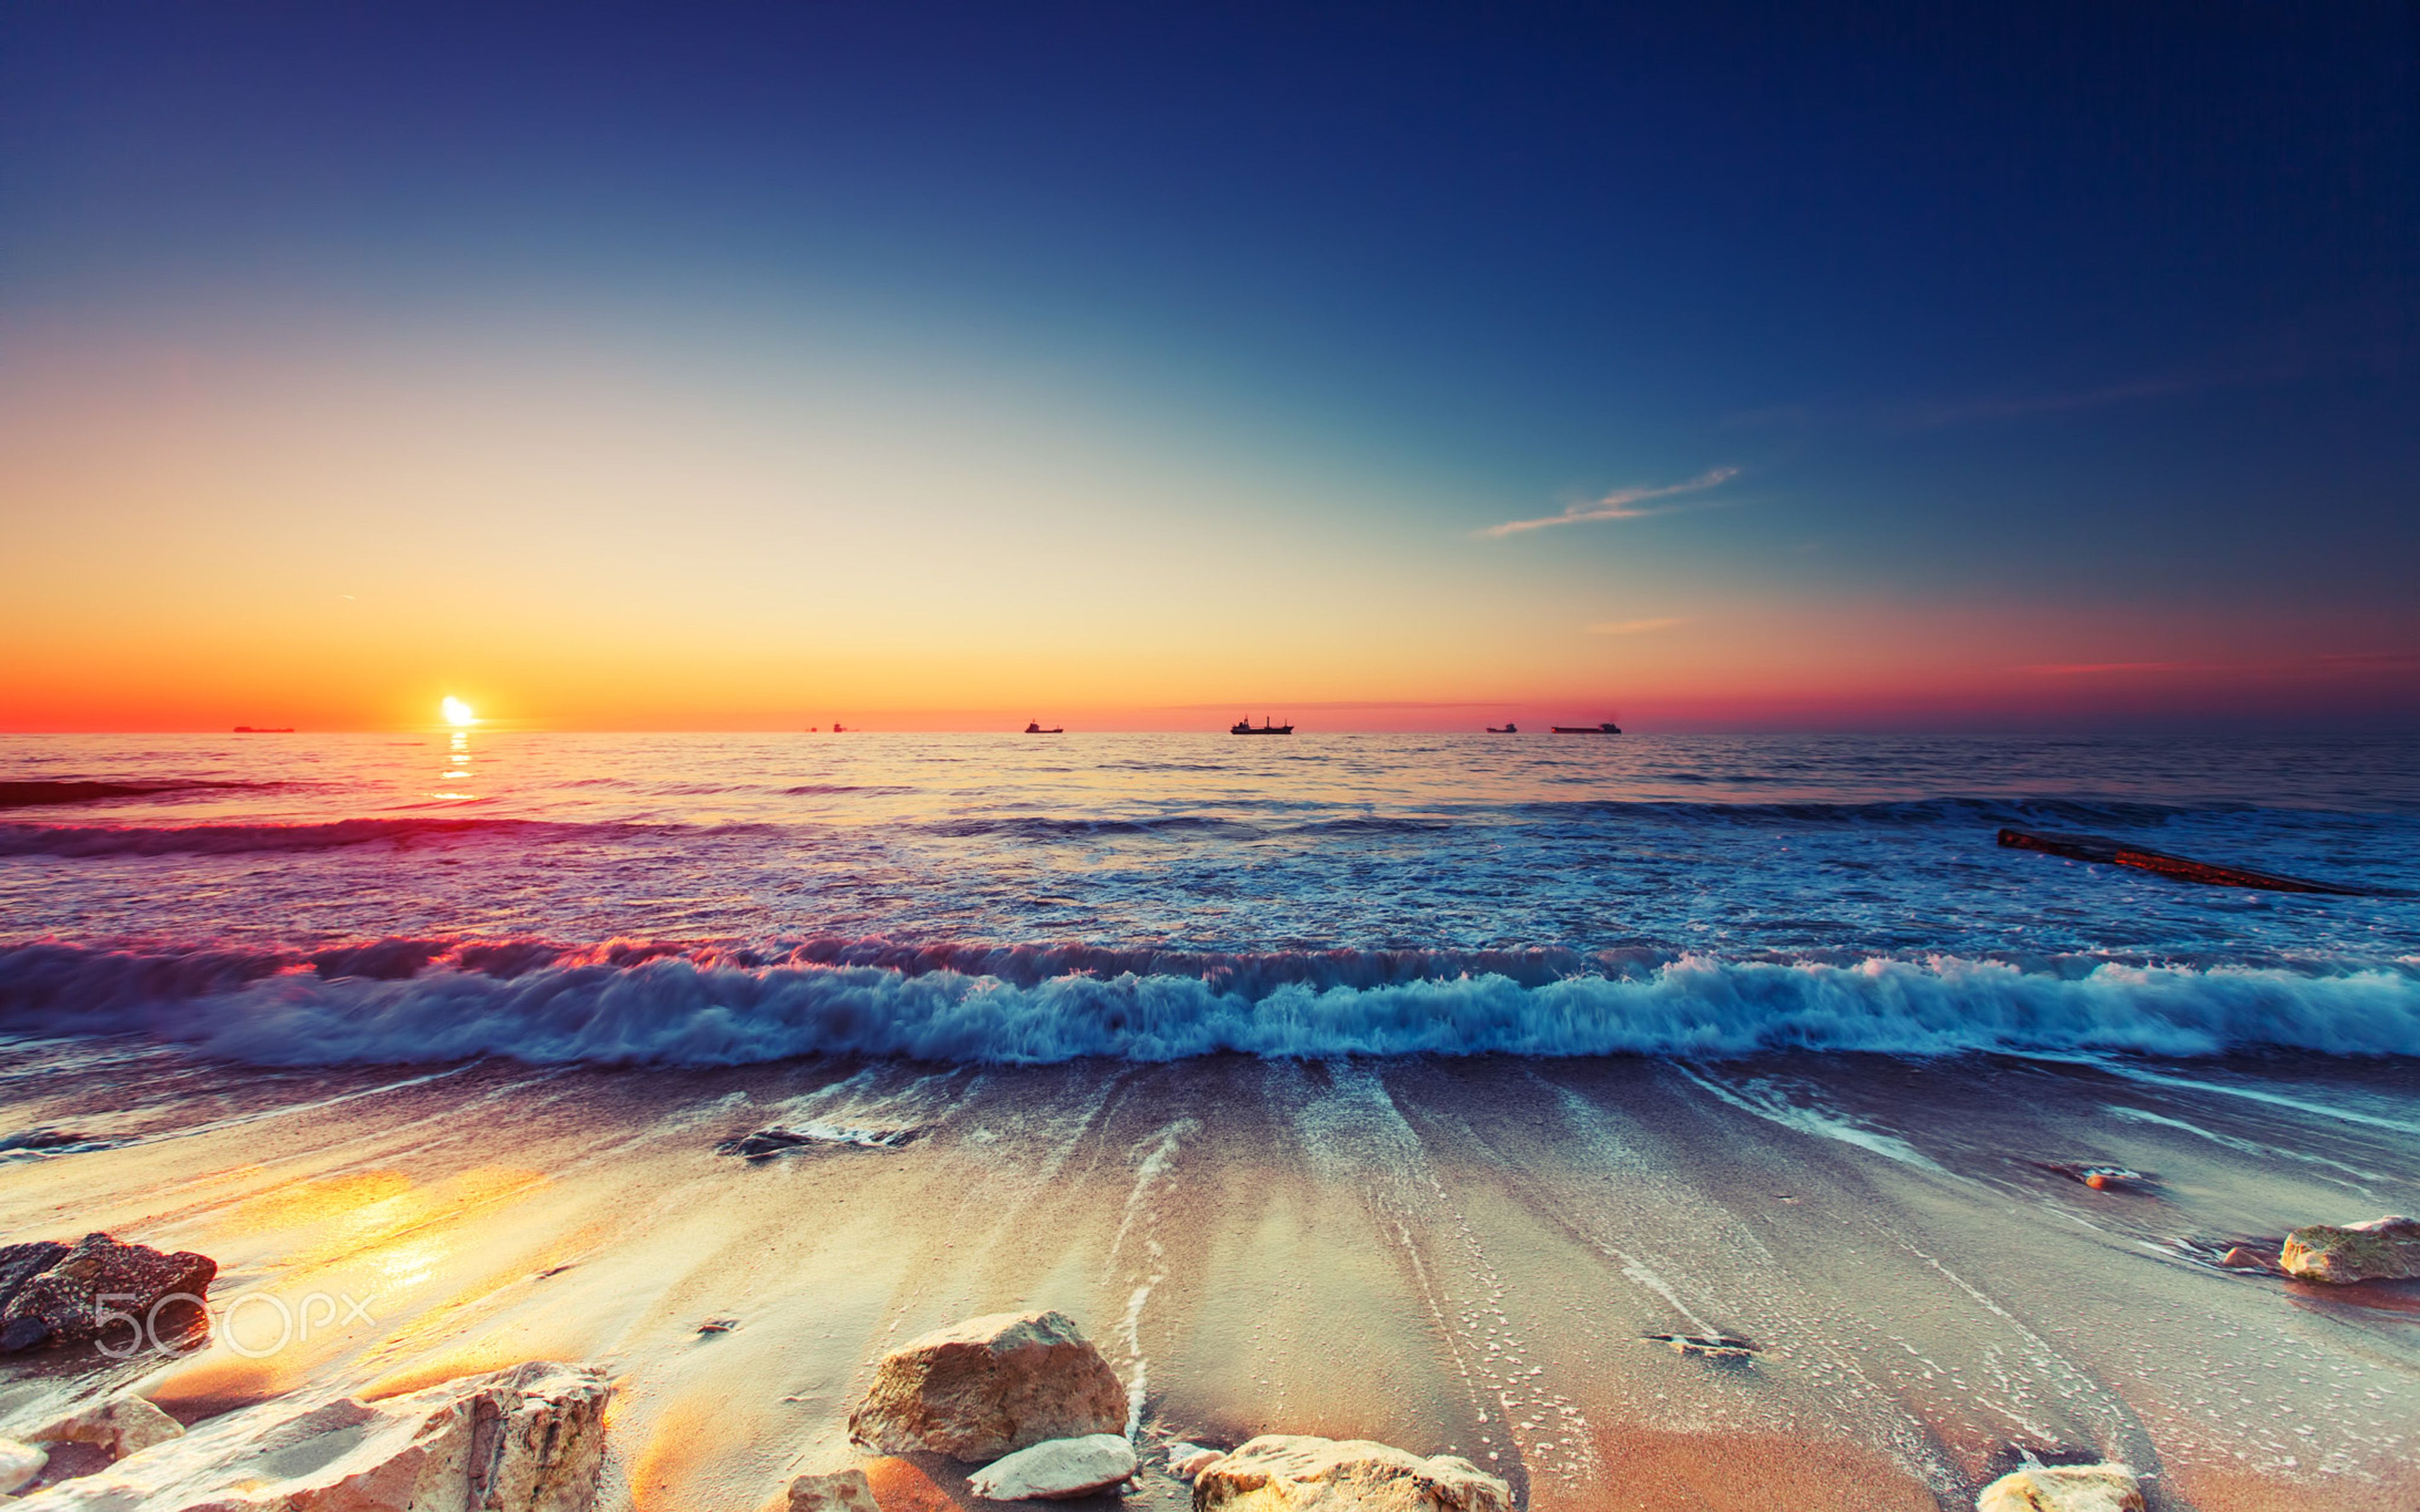 Sunrise Over The Horizon Sea Ships Sandy Beach Waves Beautiful Landscape Wallpaper For Desktop Mobile Phones And Laptops 3840x2400, Wallpaper13.com